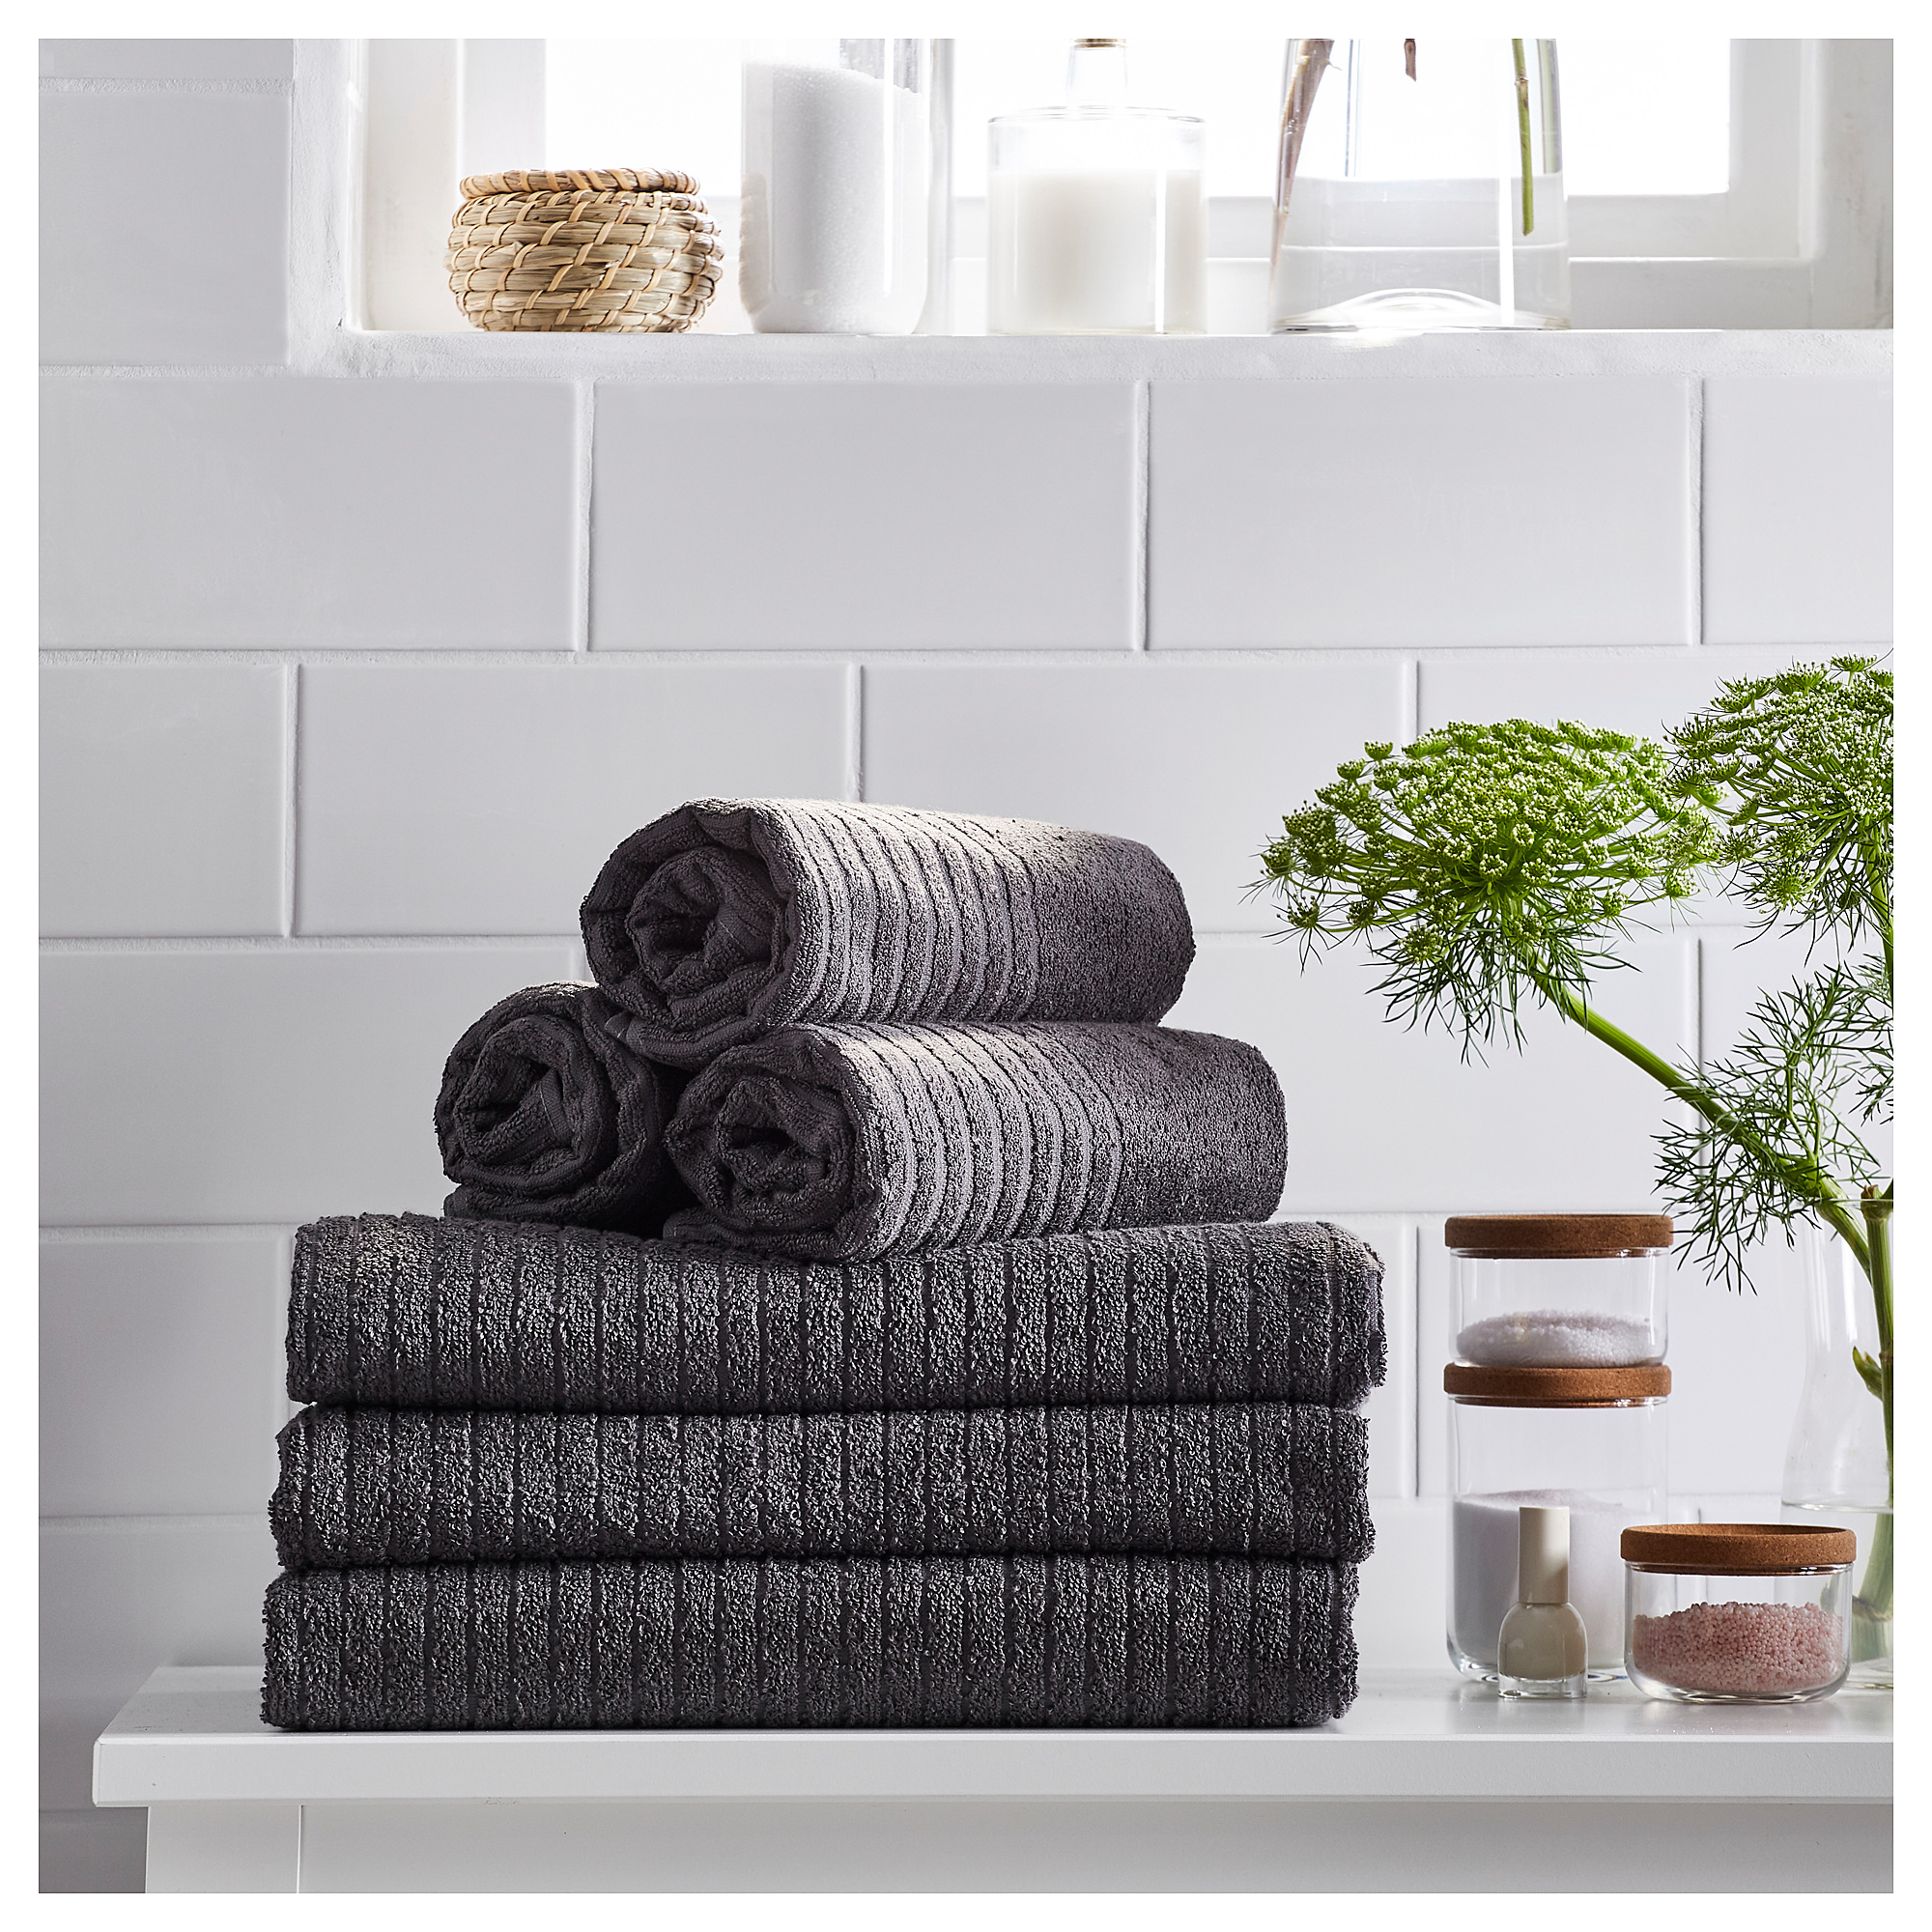 VÅGSJÖN Hand/bath towels set G